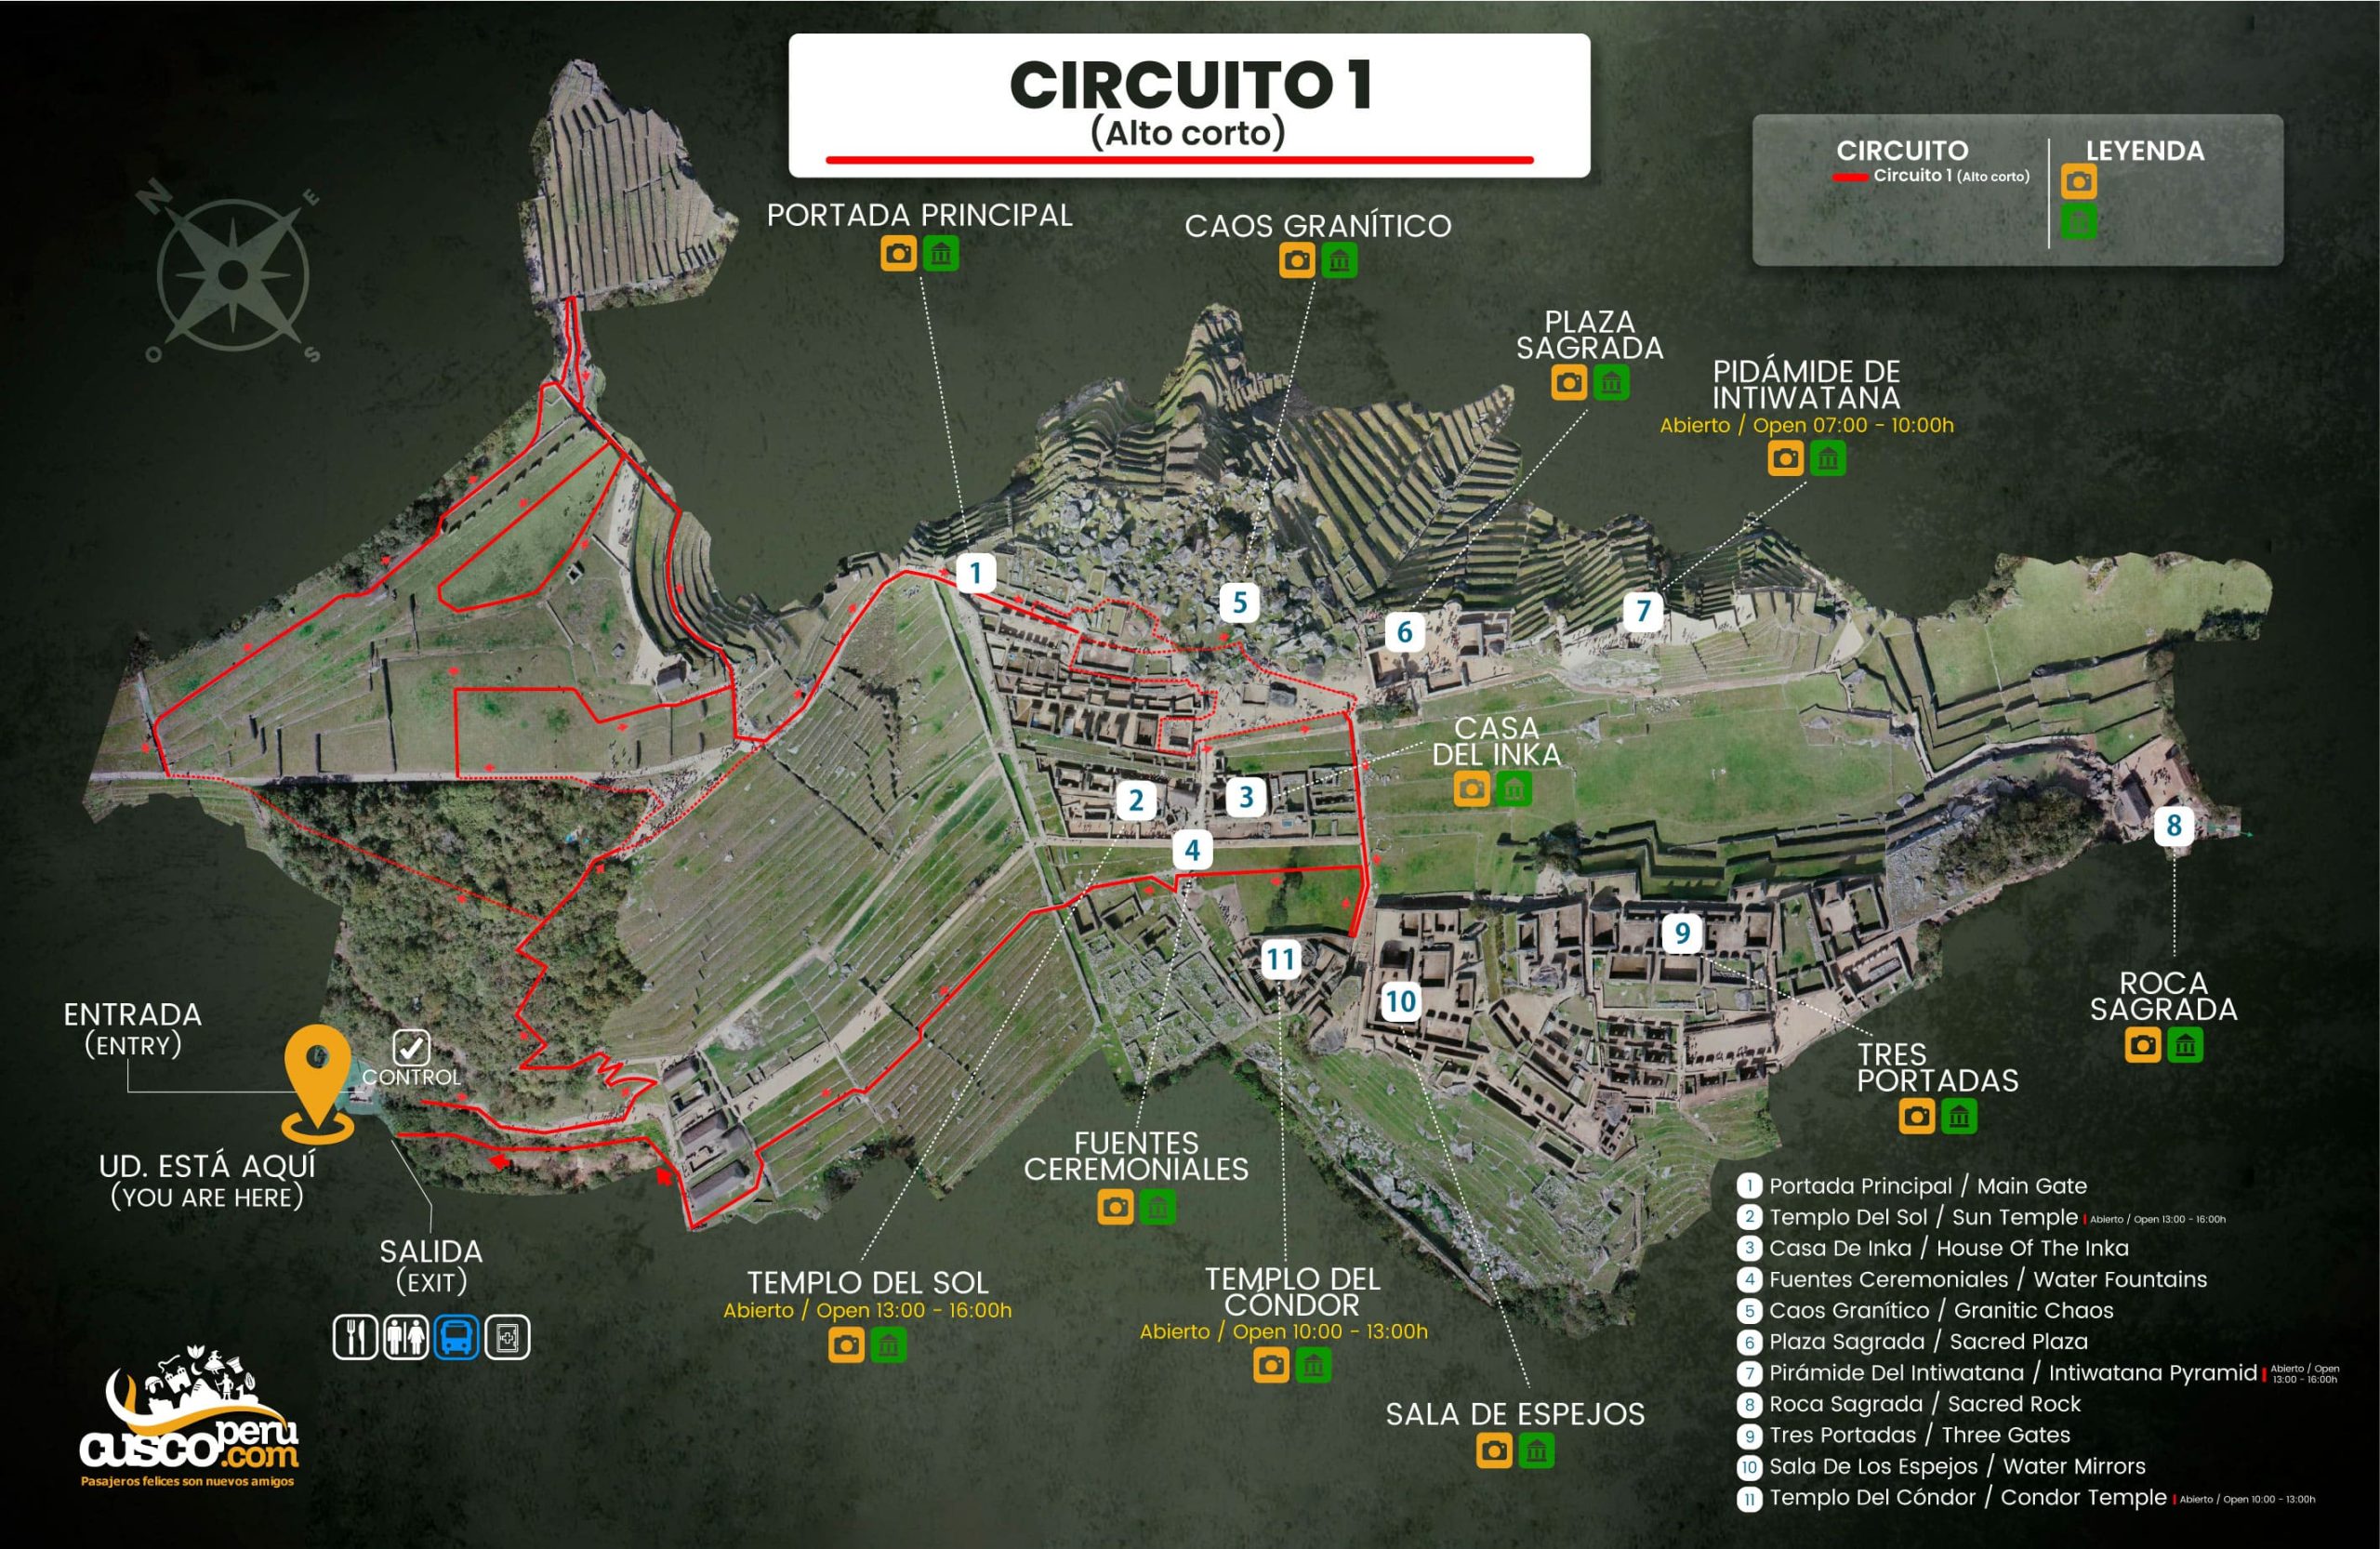 Mapa do Circuito 1 para Machu Picchu CuscoPeru.com